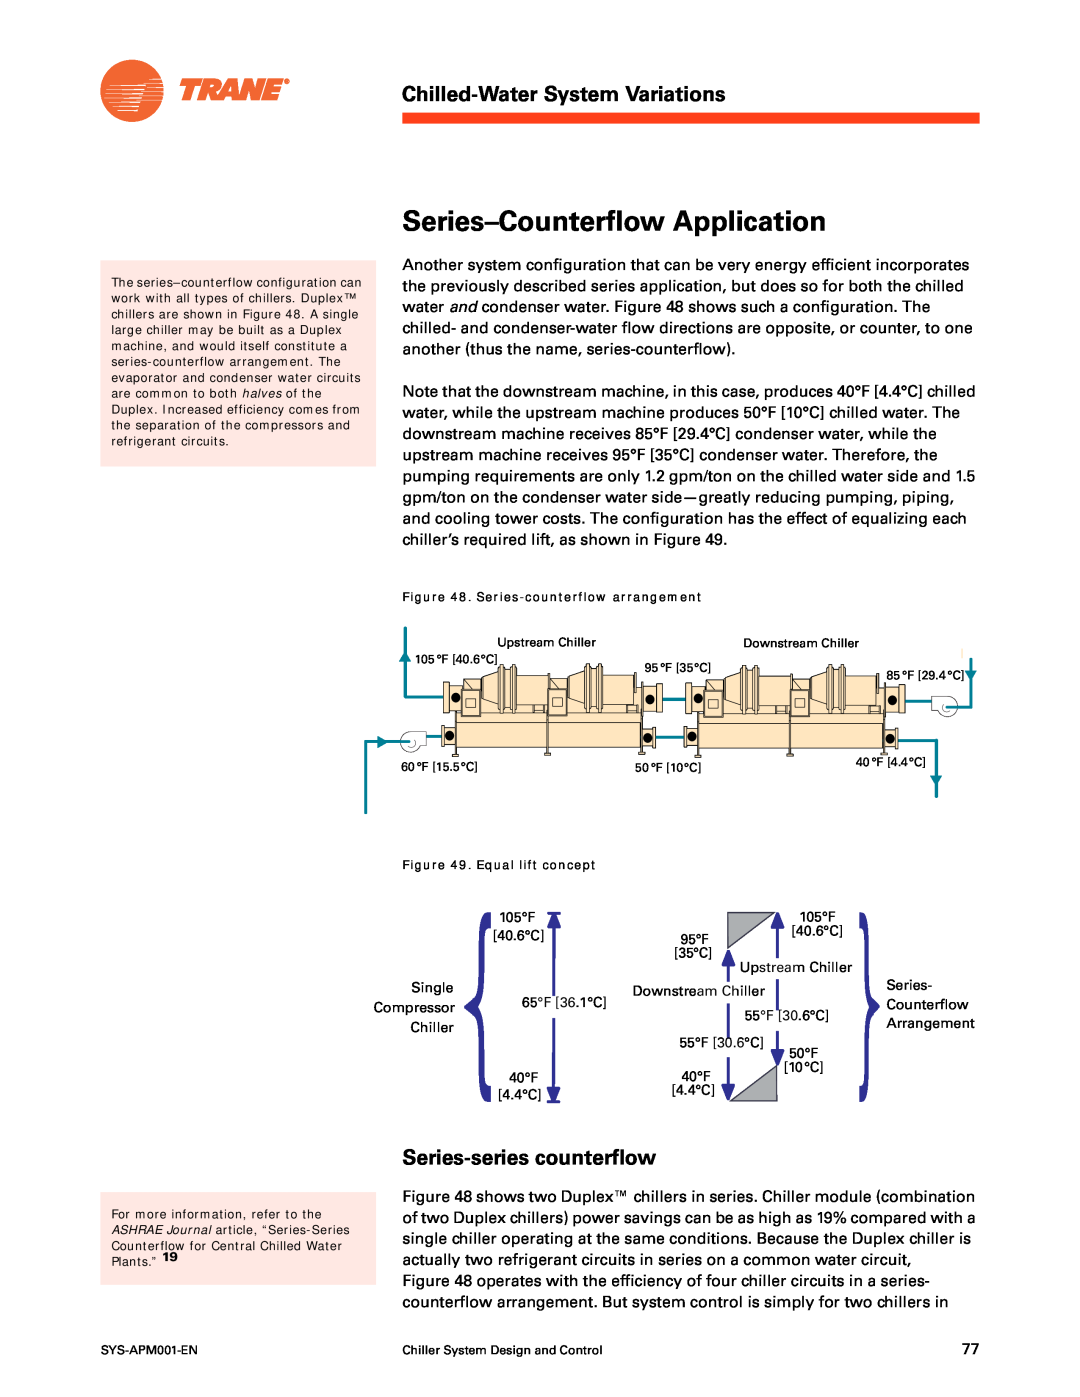 Trane SYS-APM001-EN manual Series-Counterflow Application, Series-series counterflow, Chilled-Water System Variations 